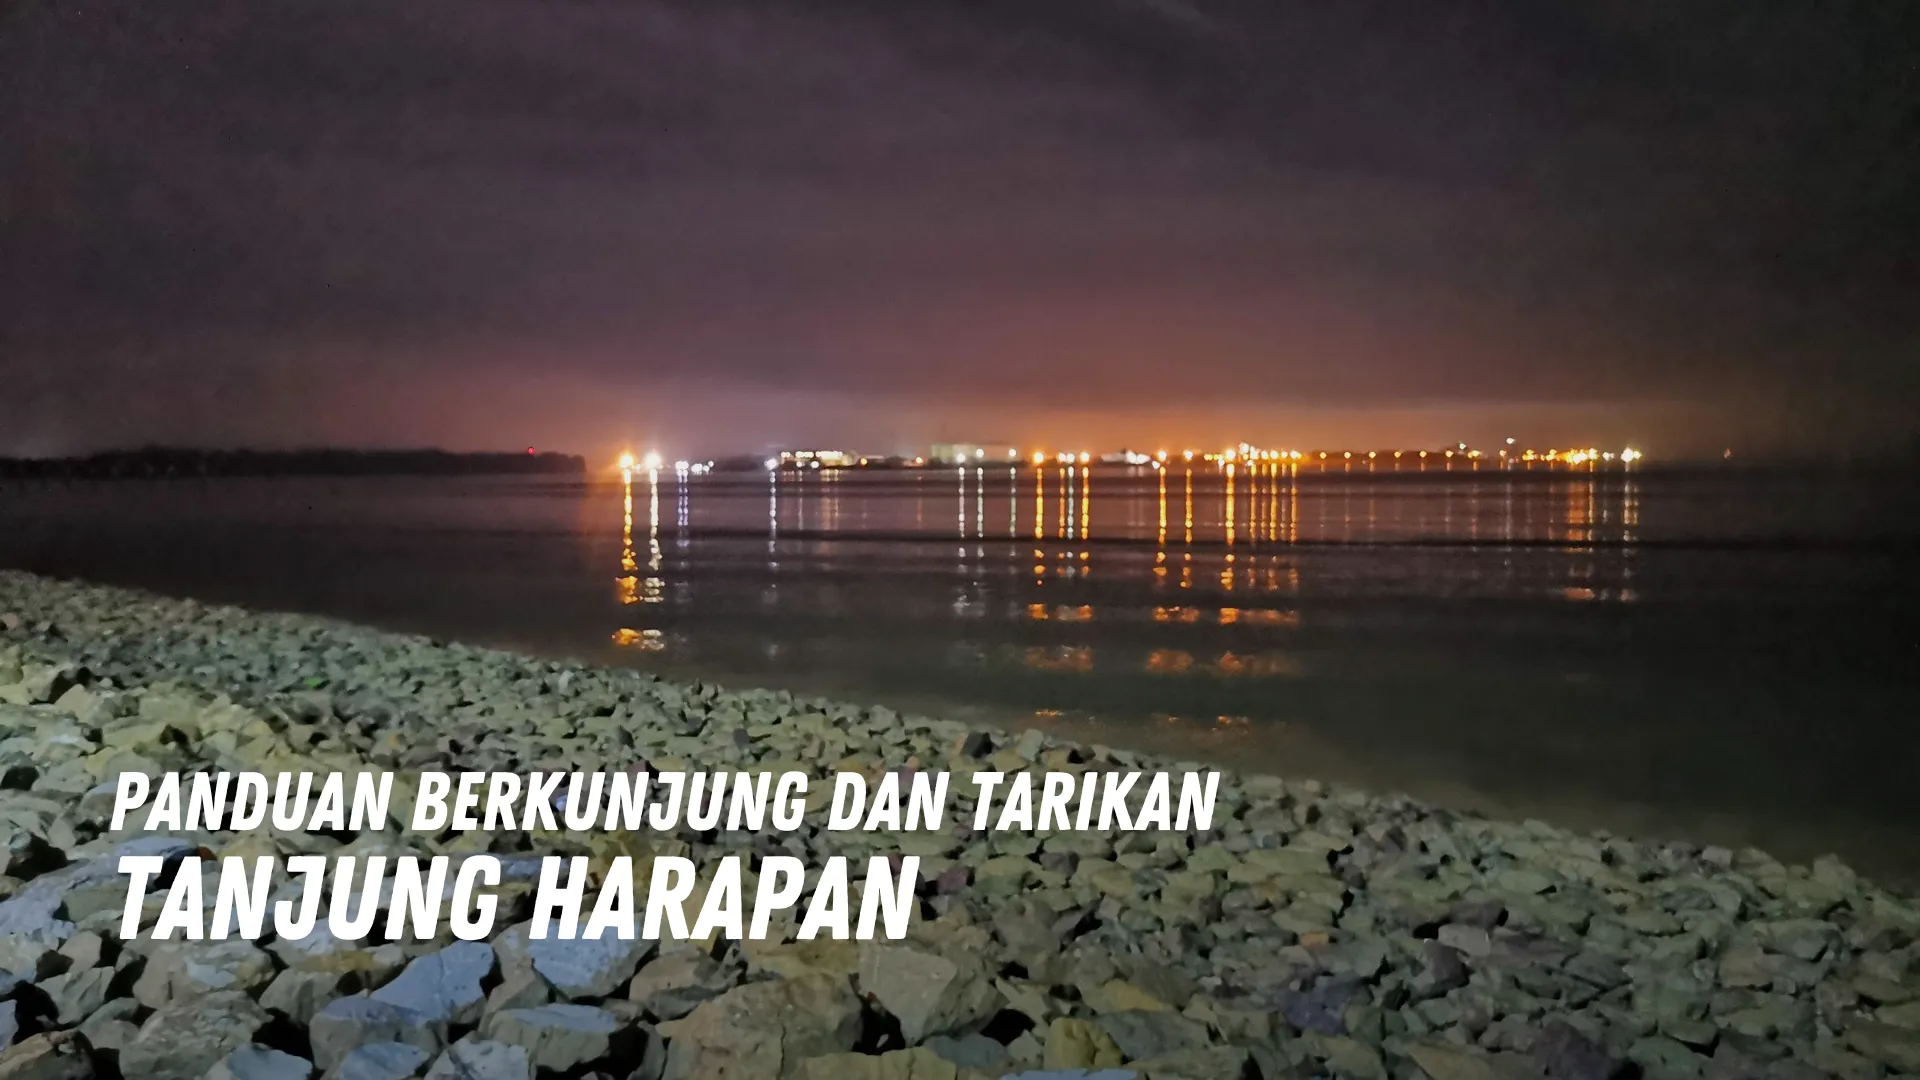 Review Tanjung Harapan Malaysia